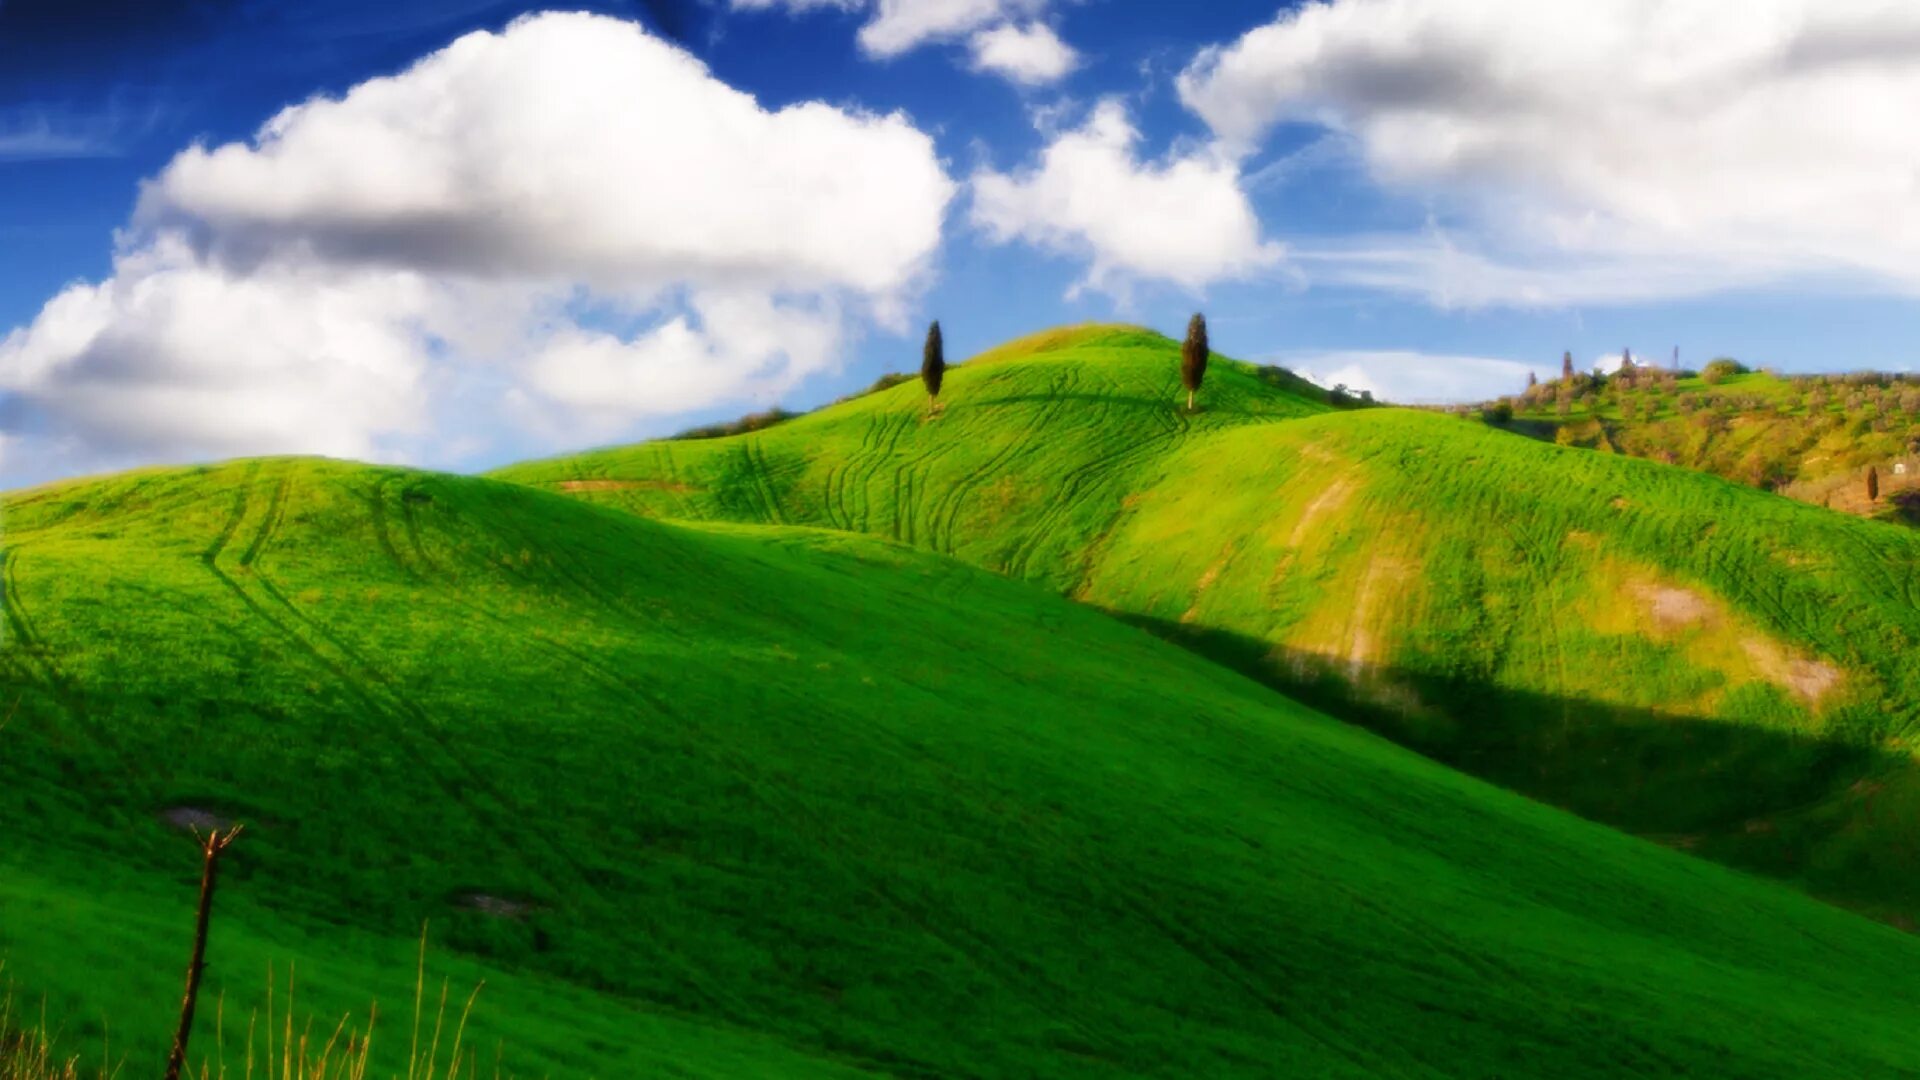 Верный холм. Green Hills зеленые холмы. Зеленые холмы 212525. Холмистая равнина Тоскана. Green Hills Чехия.